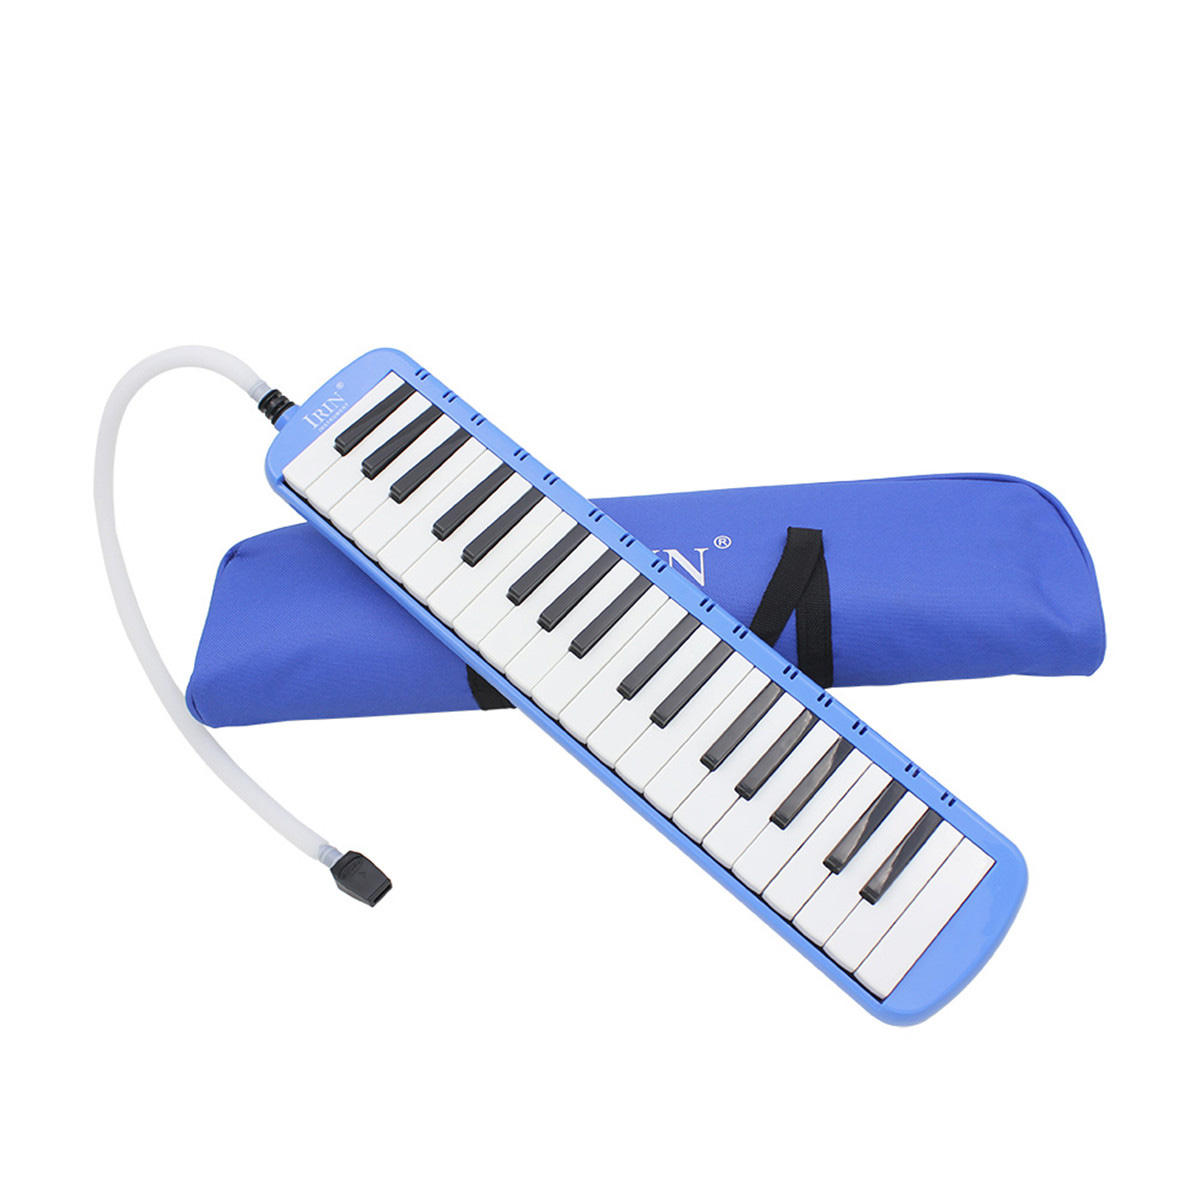 IRIN 37-Key Melodica Harmonica Electronic Keyboard Mouth Organ With Handbag